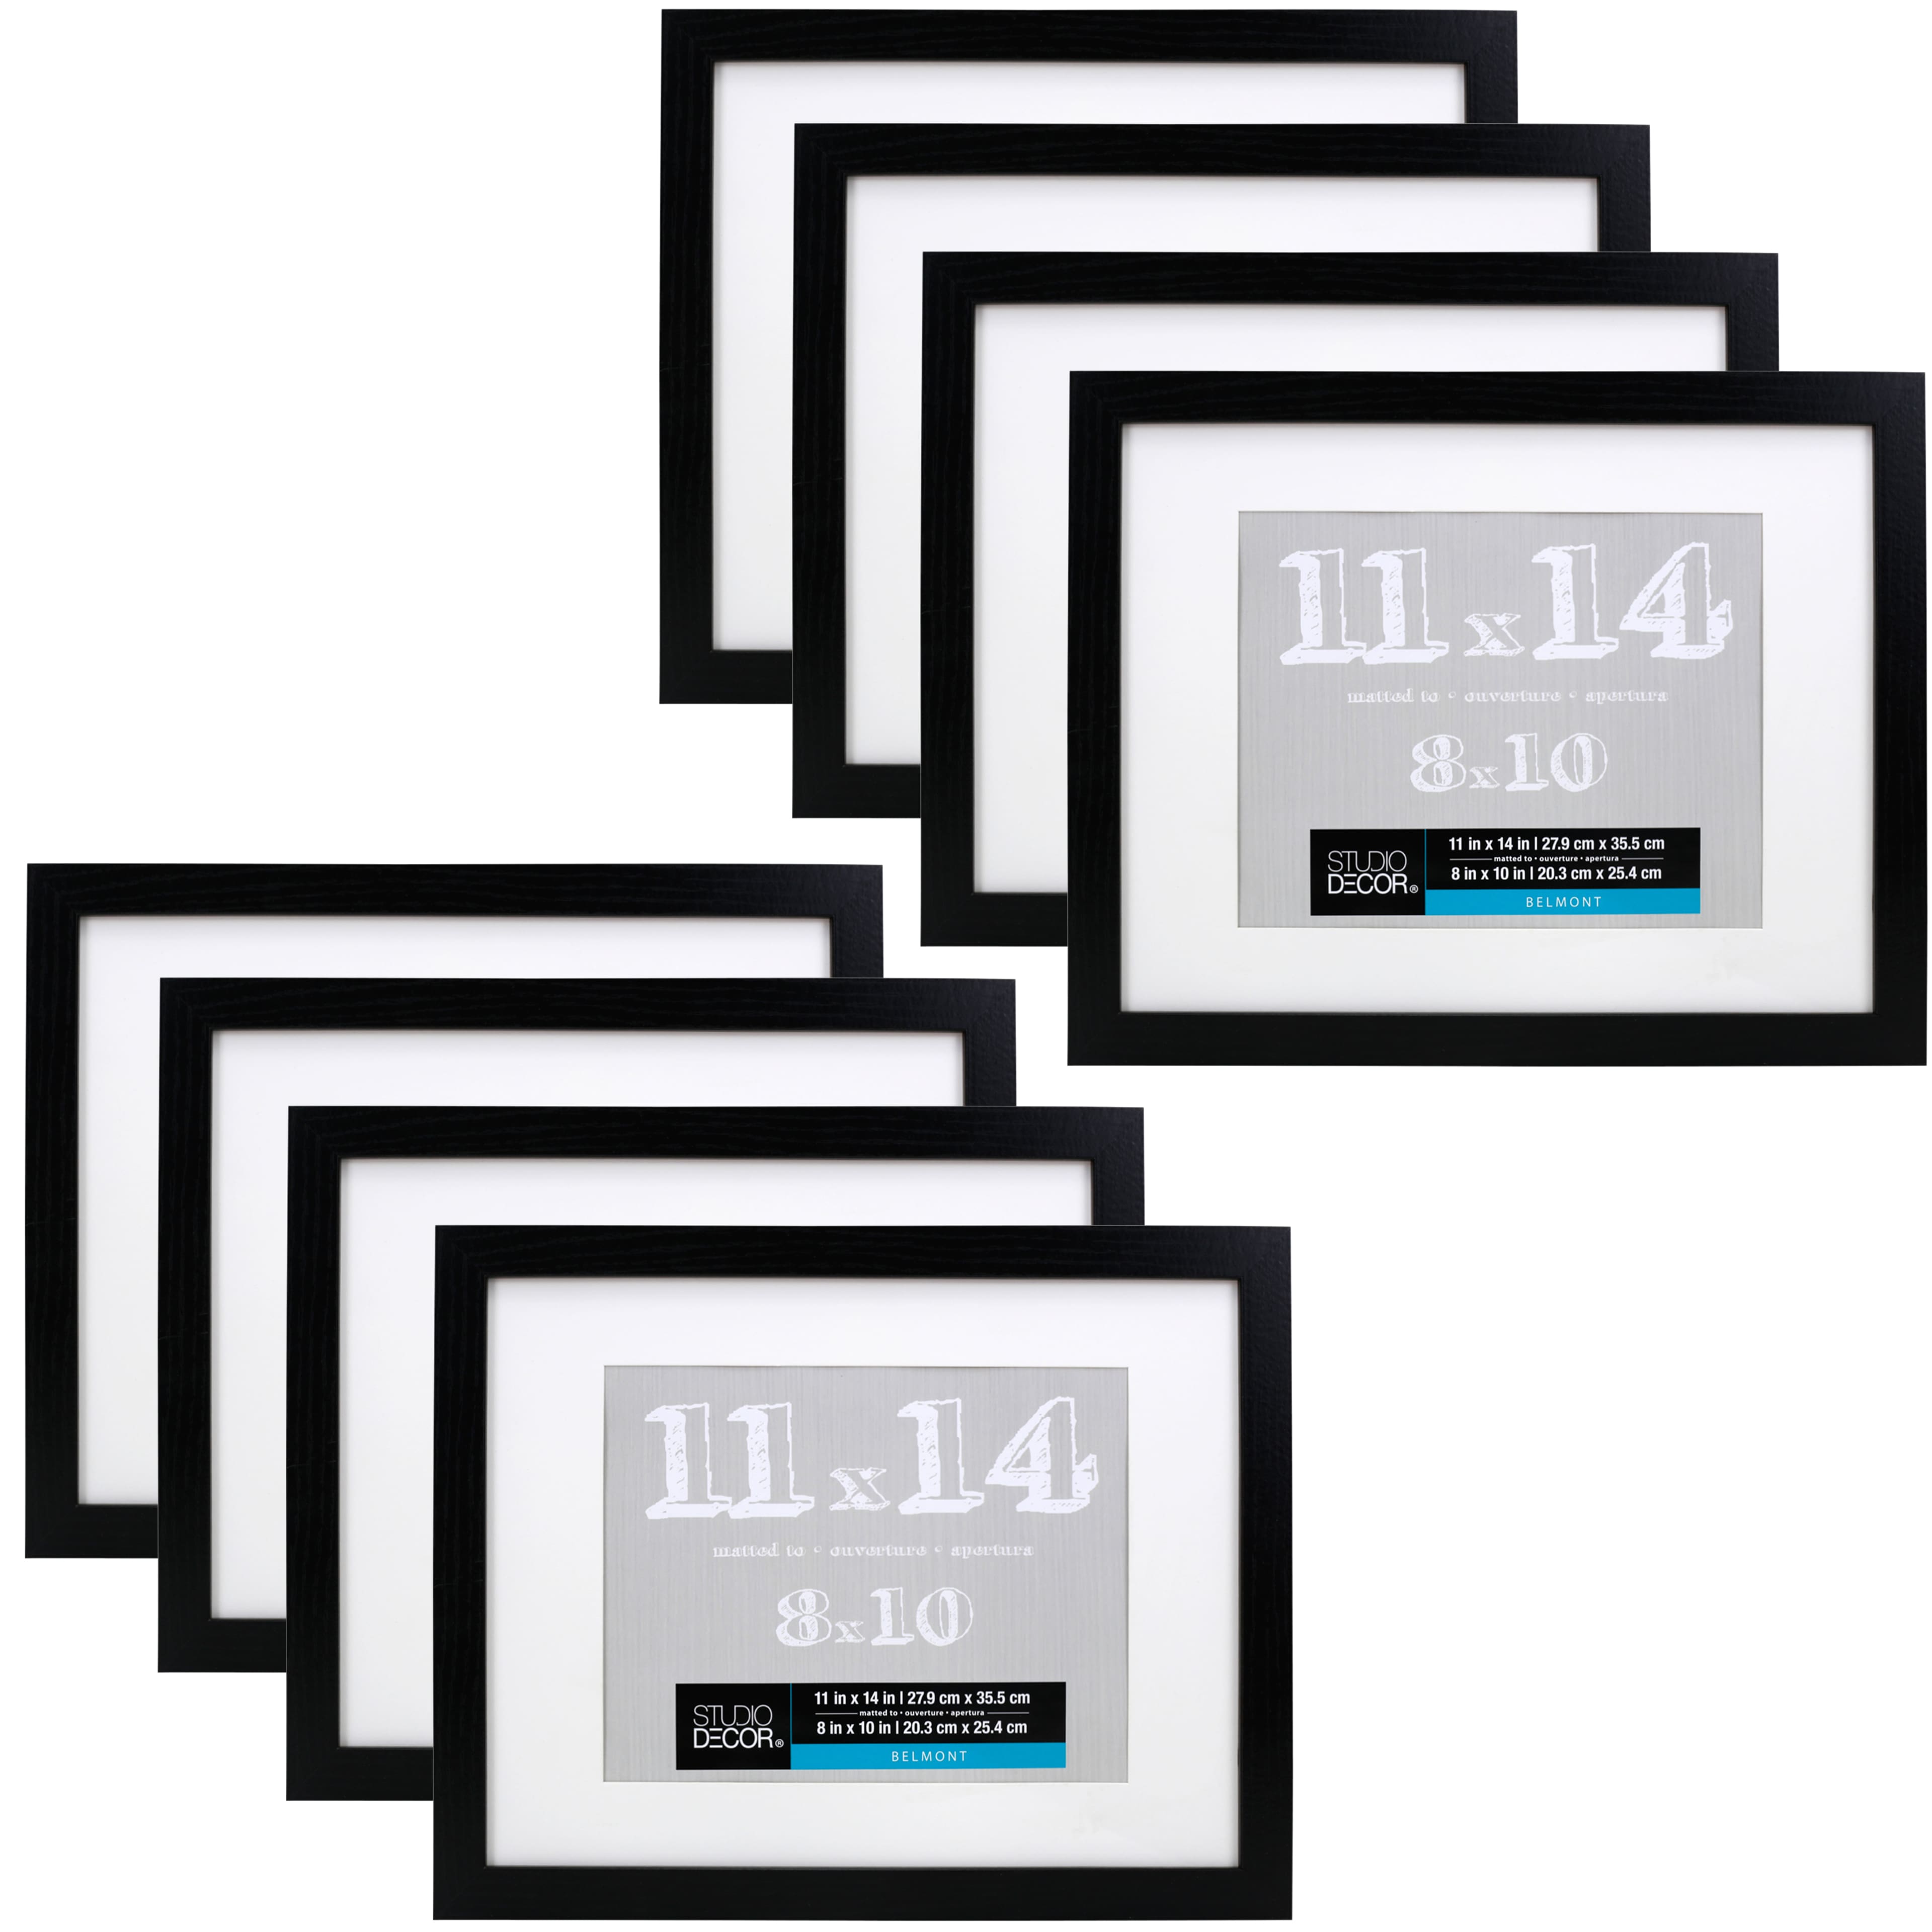 5 Pack: Black Thin 16 x 20 Float Frame, Basics by Studio Décor®